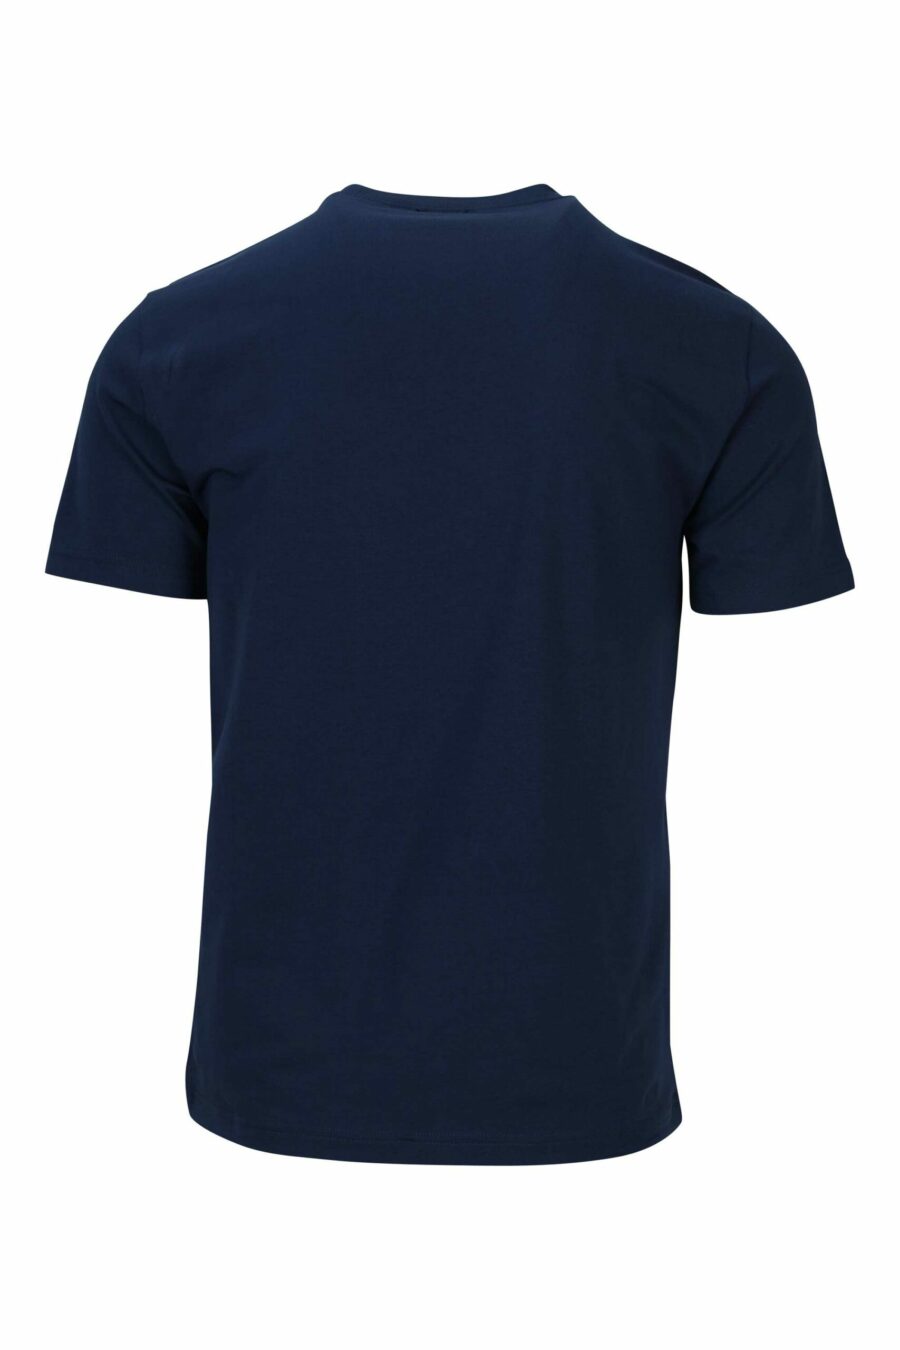 Dark blue T-shirt with neon orange "lux identity" maxilogo - 8058947491445 1 scaled